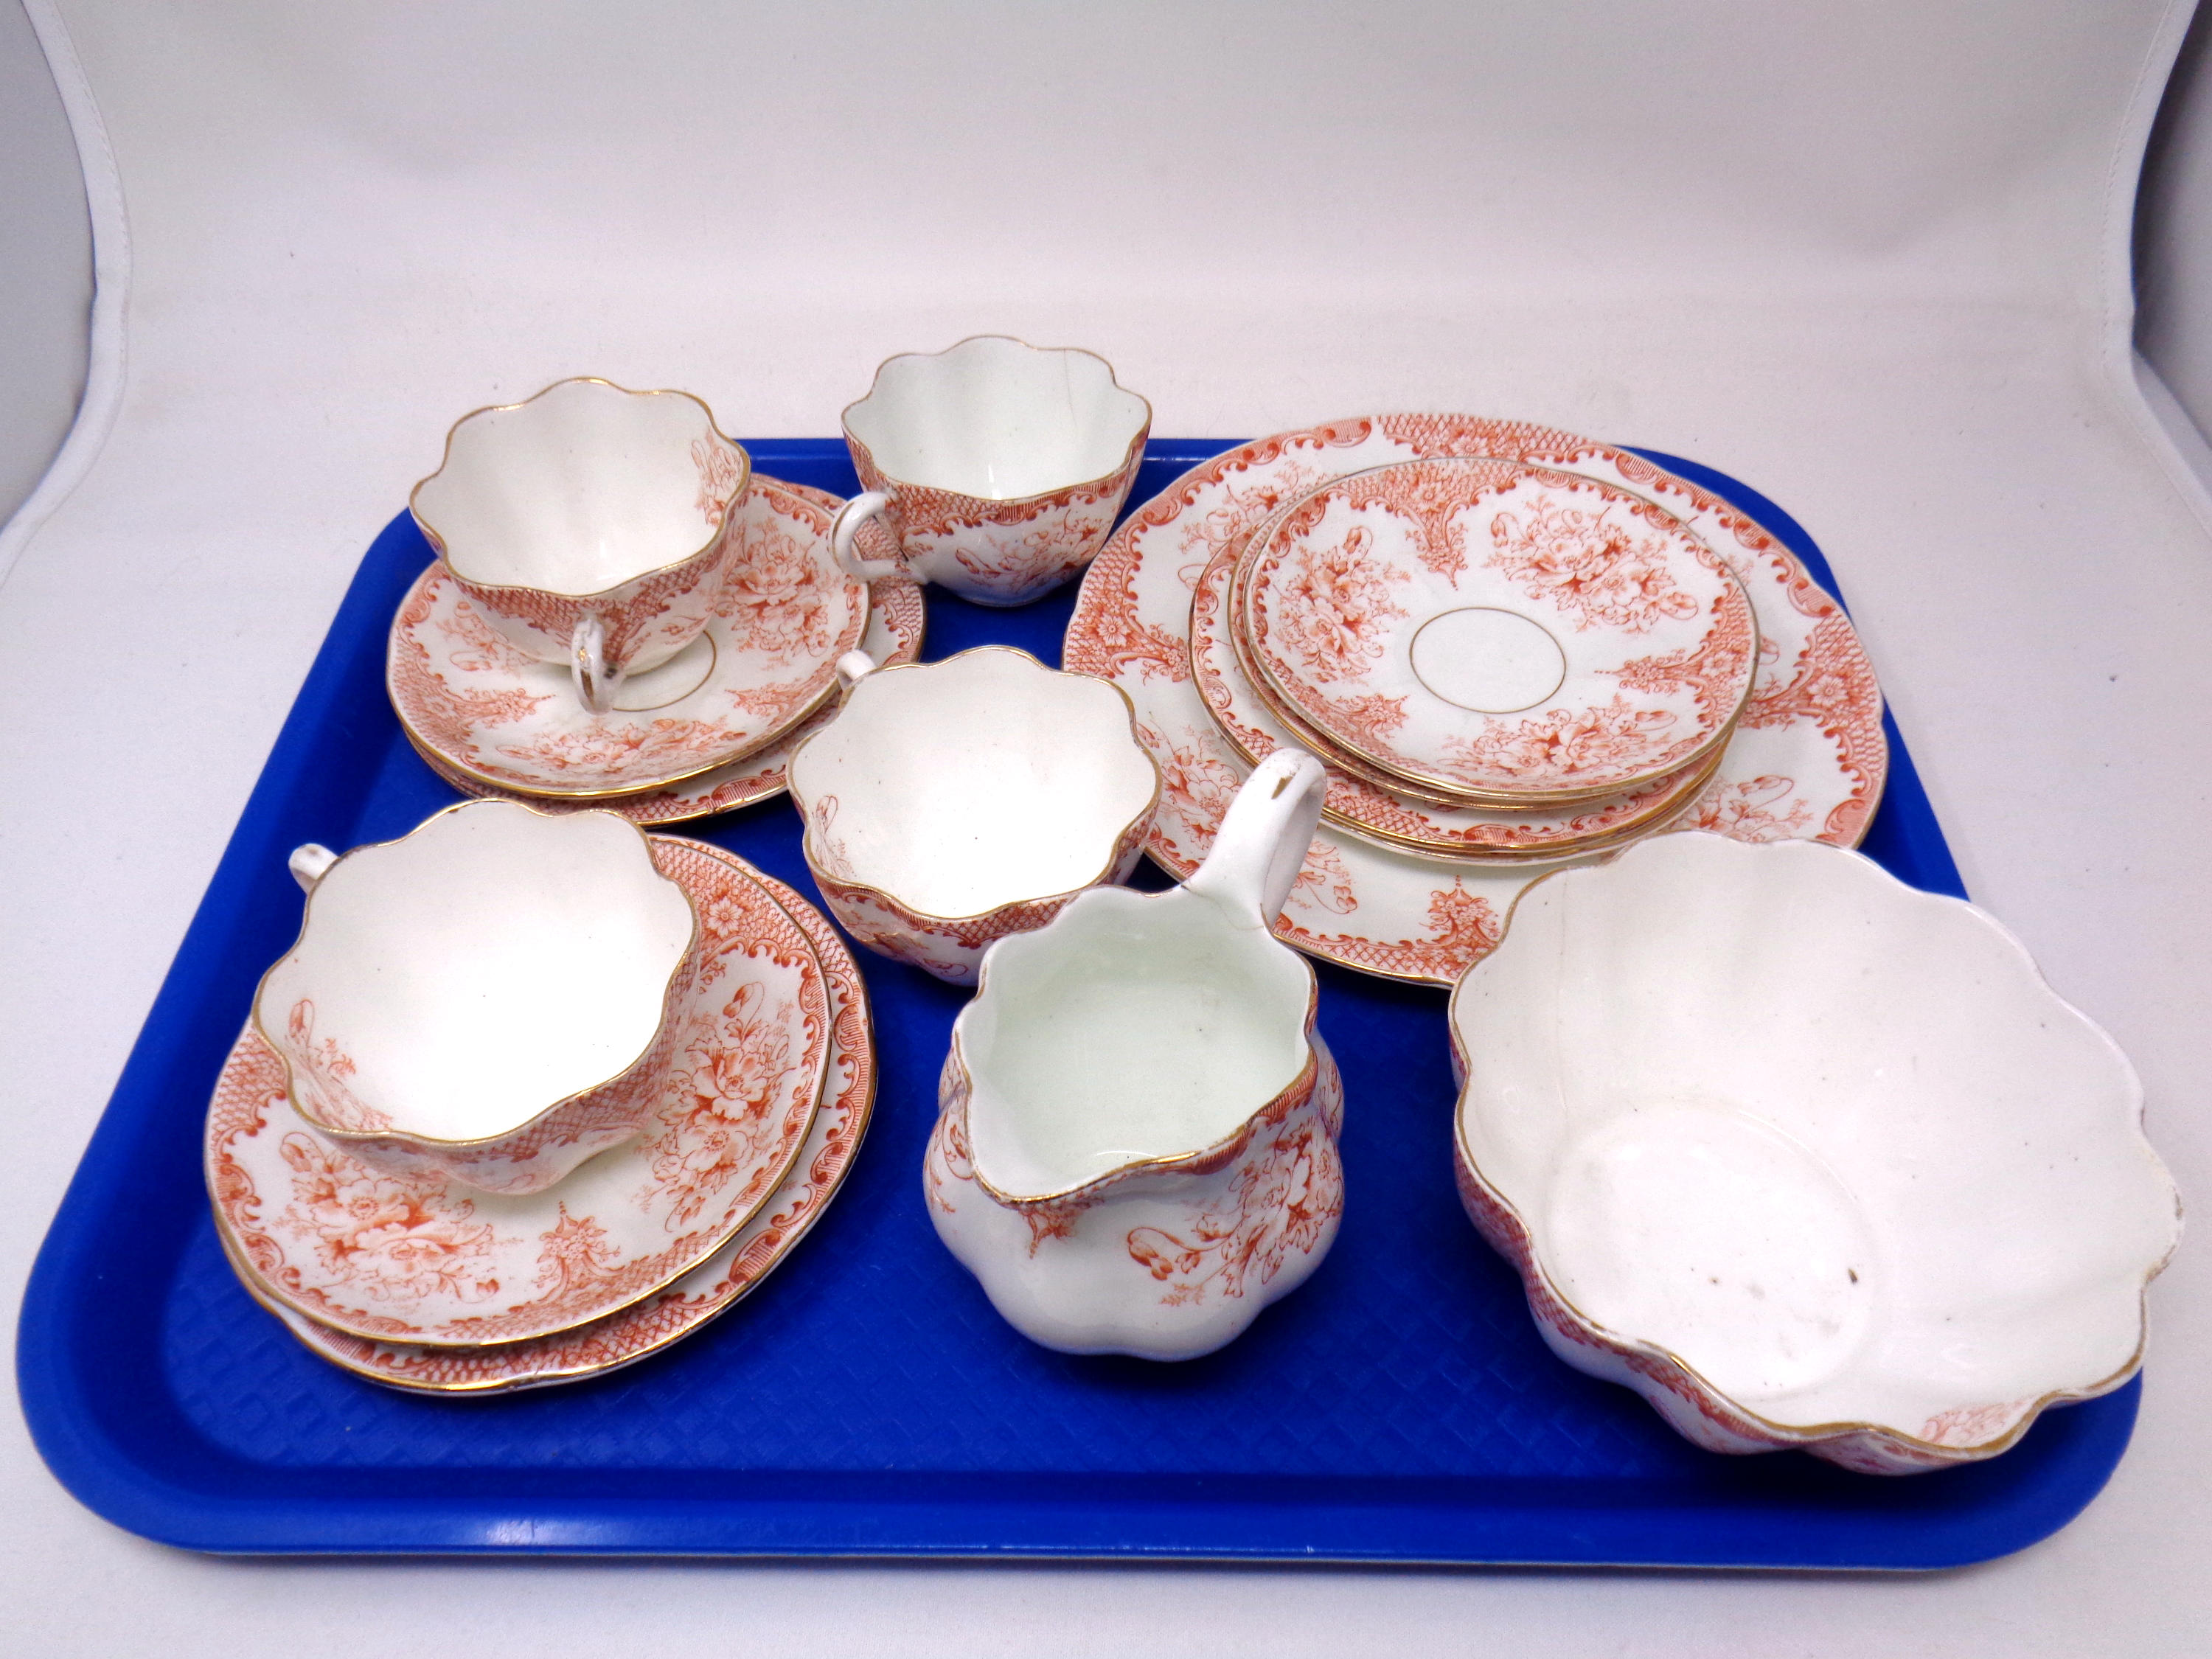 A tray containing a 15 piece antique bone china tea service.